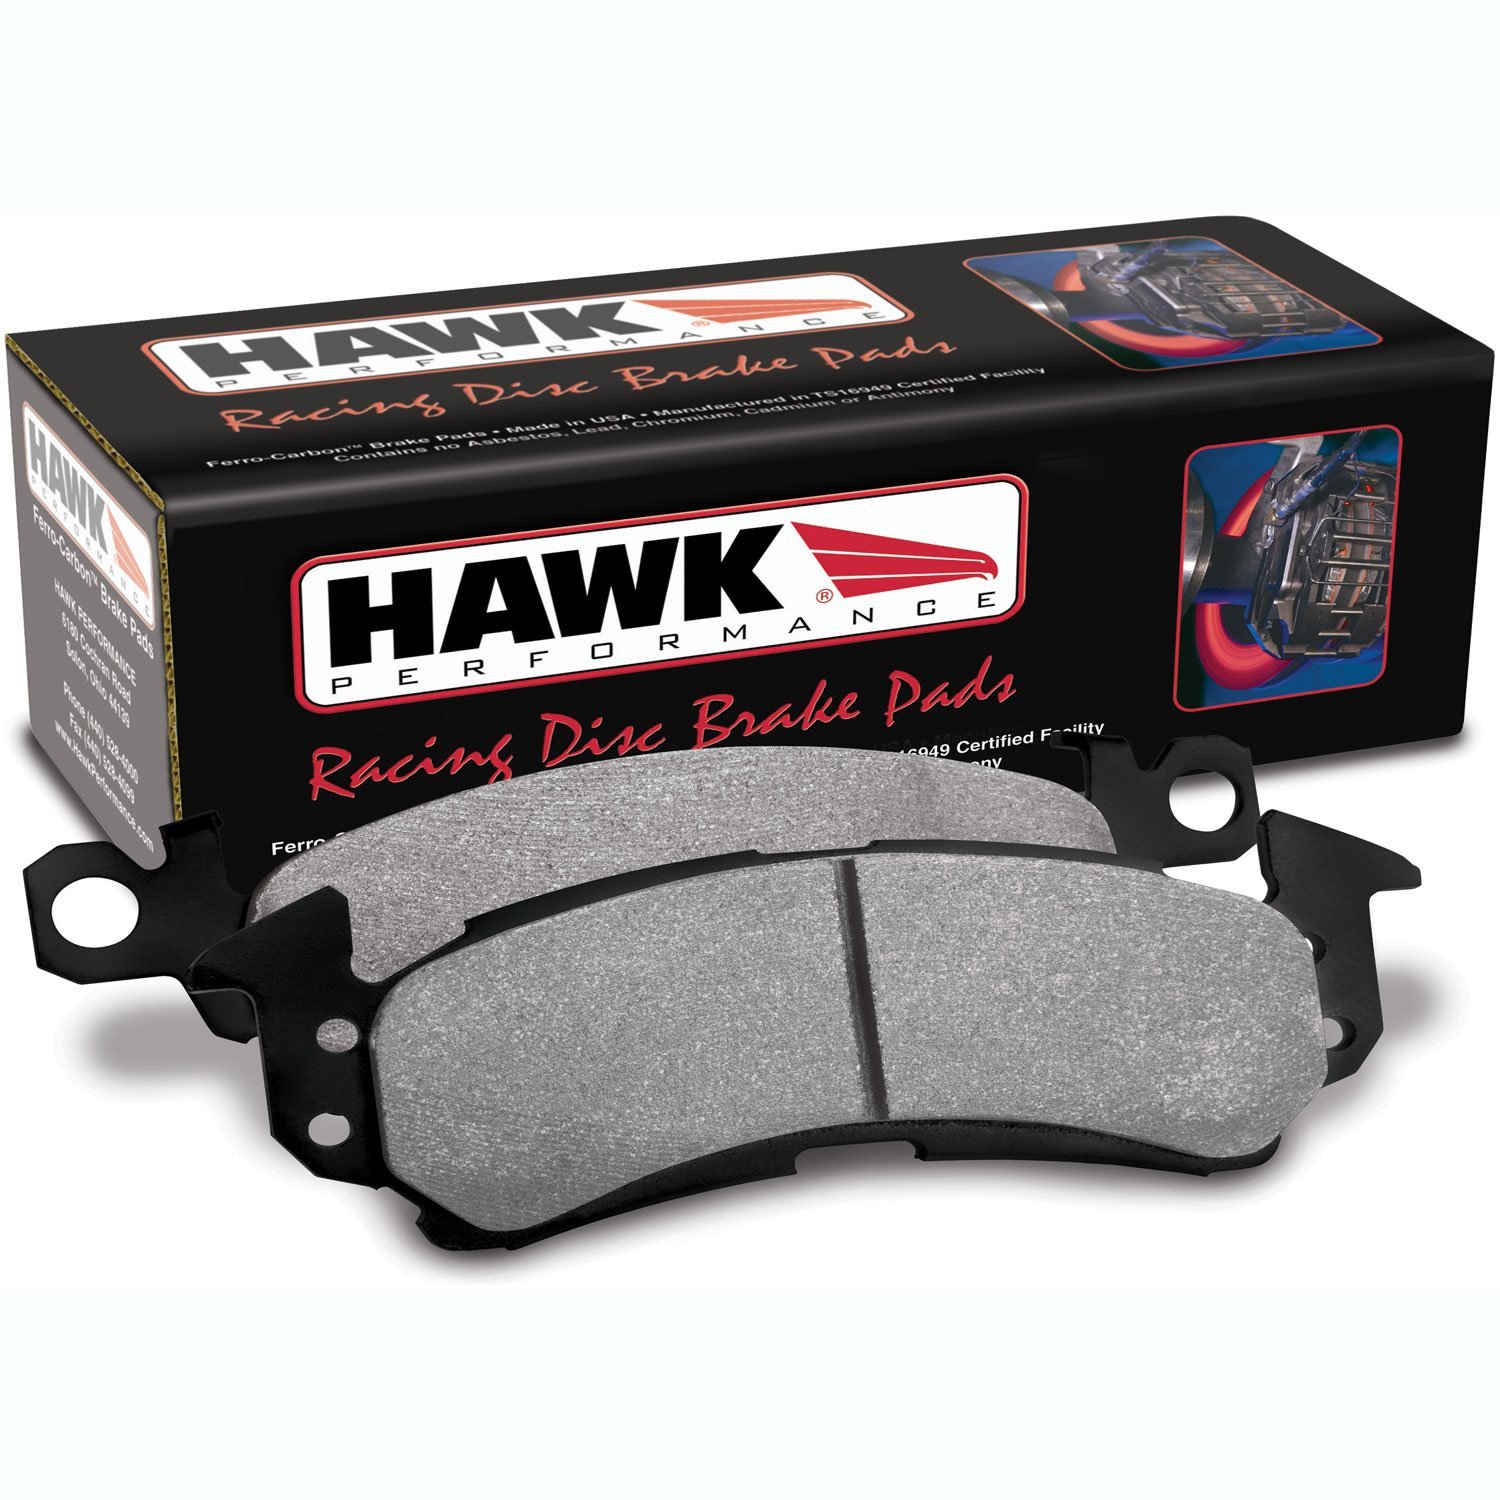 Disc Brake Pad HP Plus w/0.679 Thickness